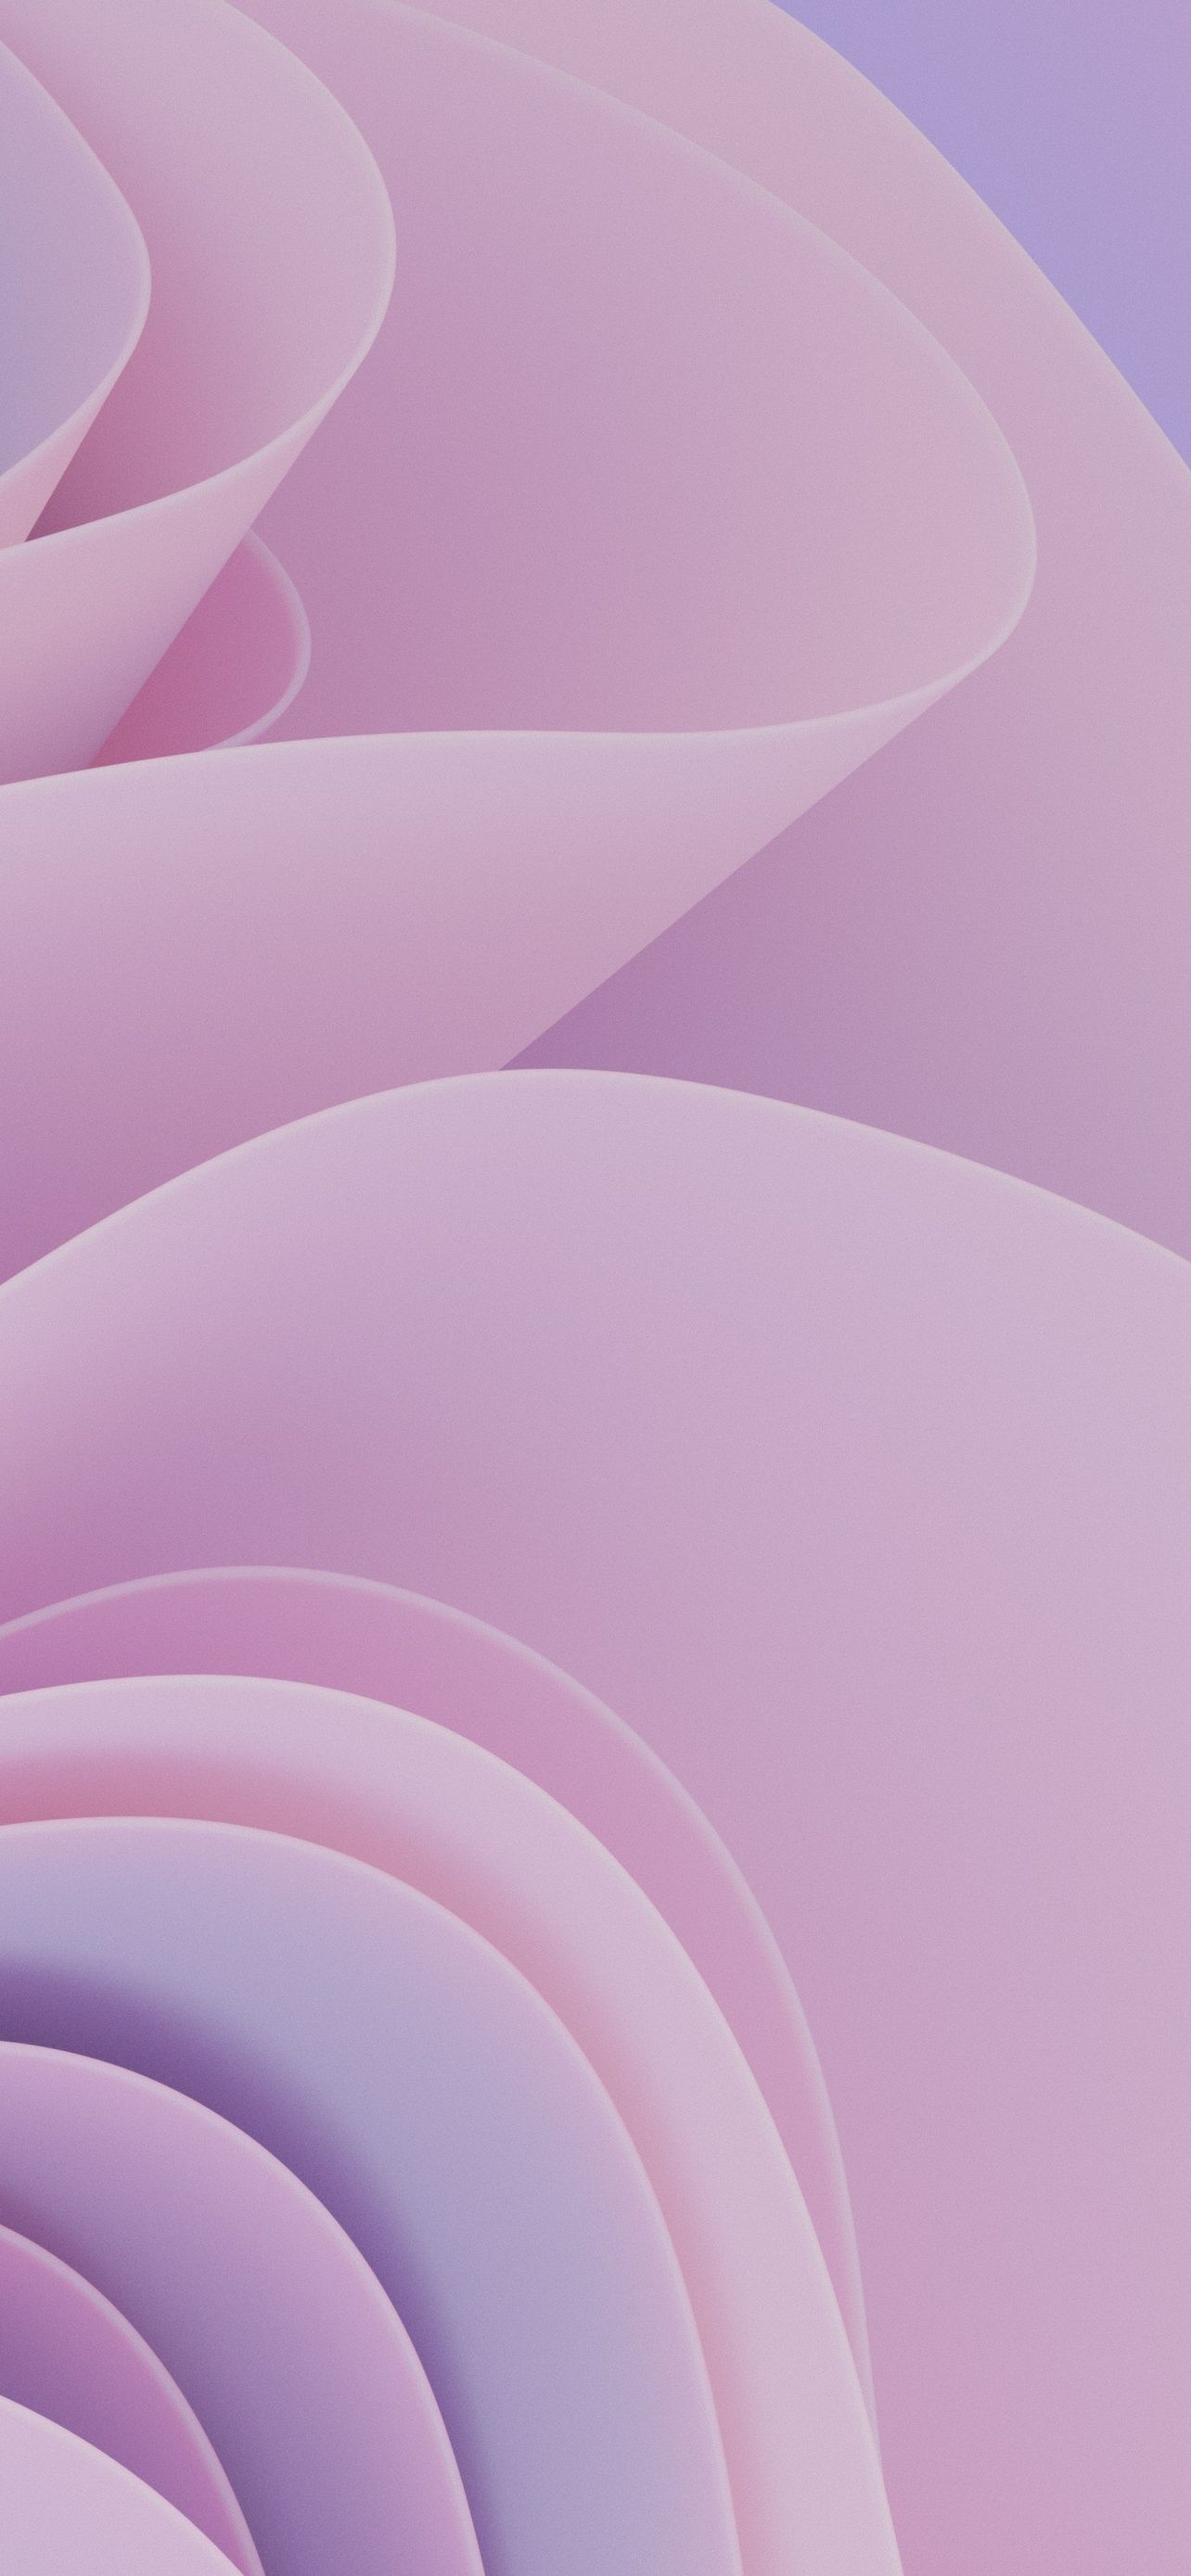  IPhone 5 Hintergrundbild 1284x2778. 3D Render Wallpaper 4K, Waves, Girly, Pink abstract